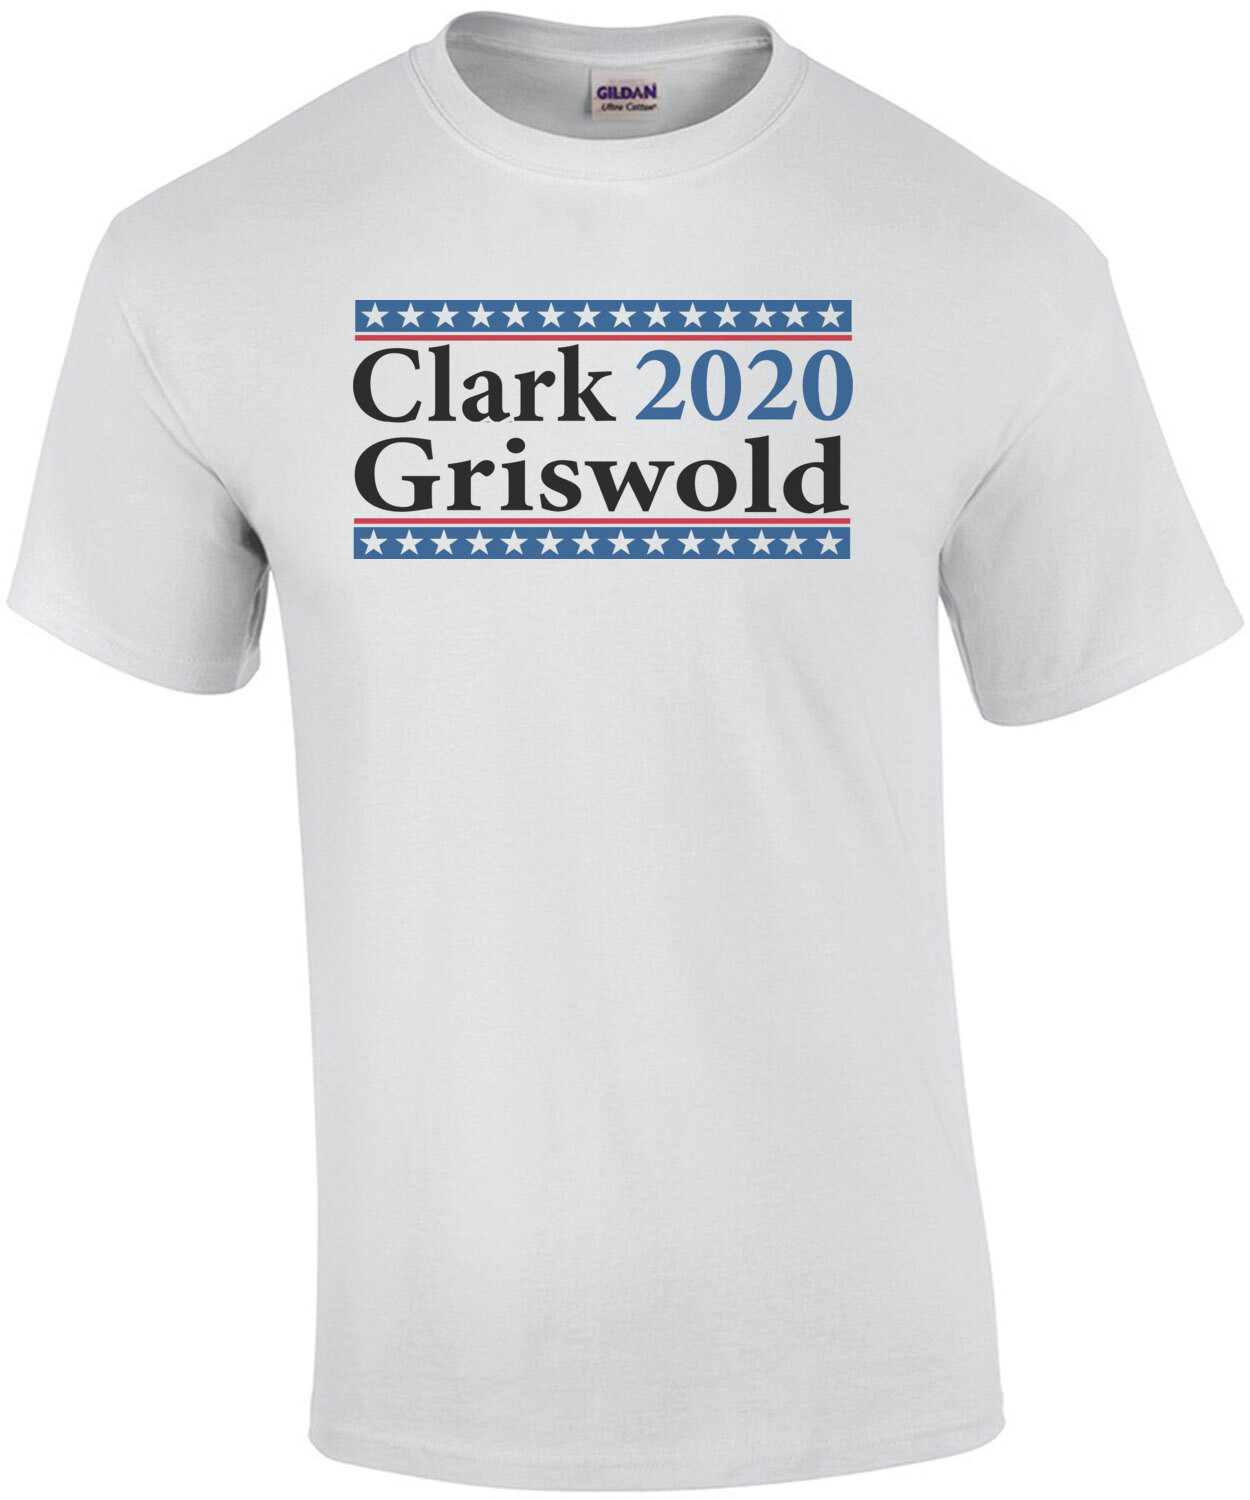 Clark Griswold 2020 - 2020 election t-shirt